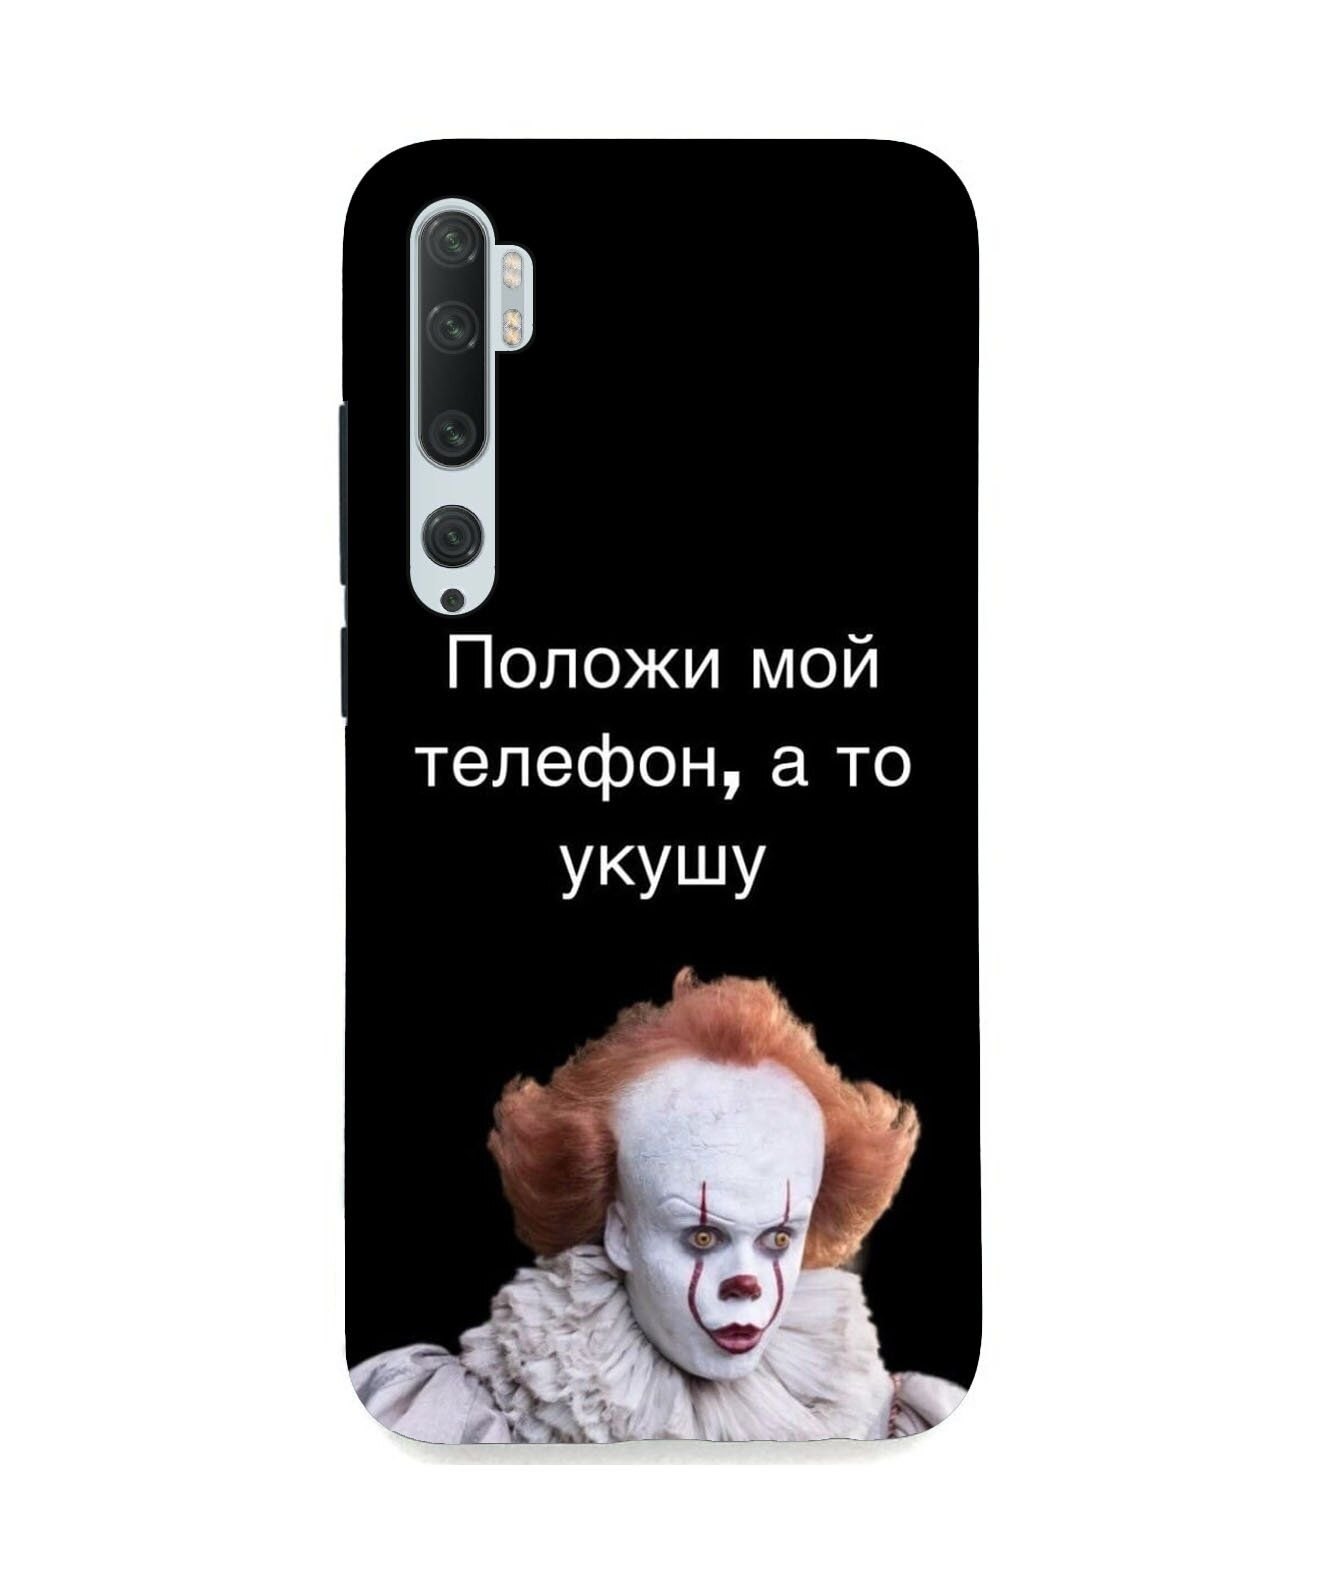 Заставка на телефон не трогай мой телефон на русском